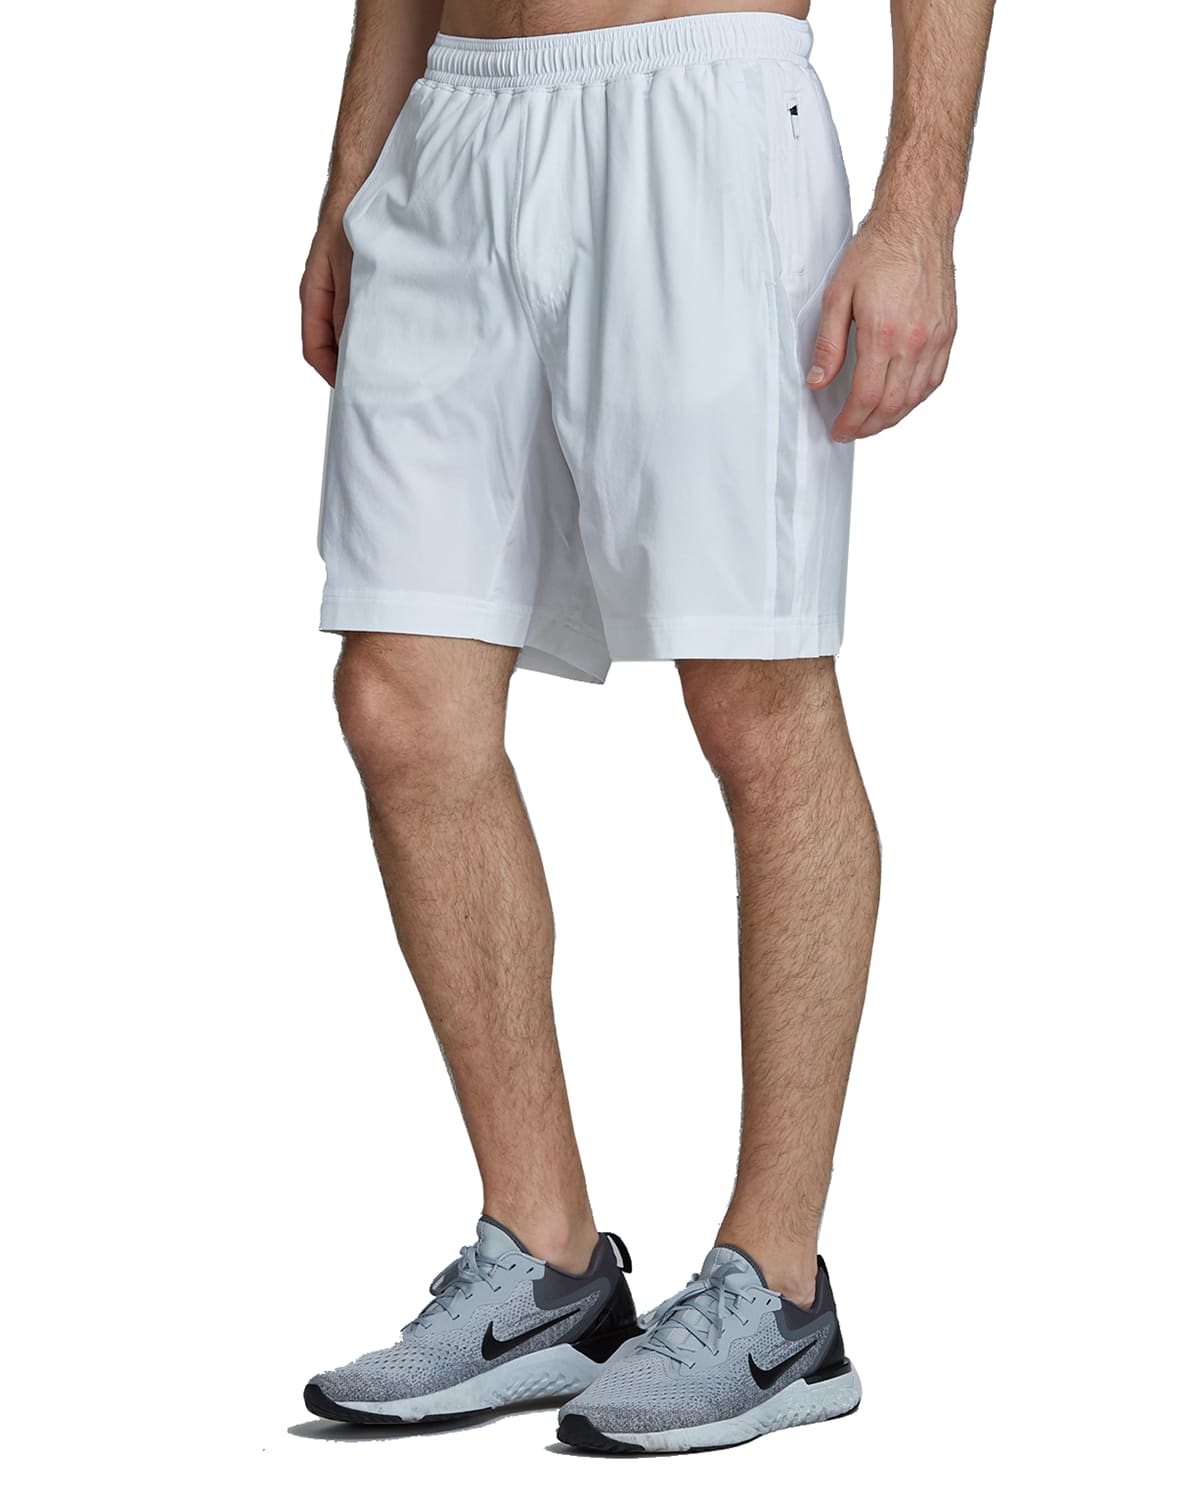 Fourlaps Men's Advance 9-Inch Athletic Shorts